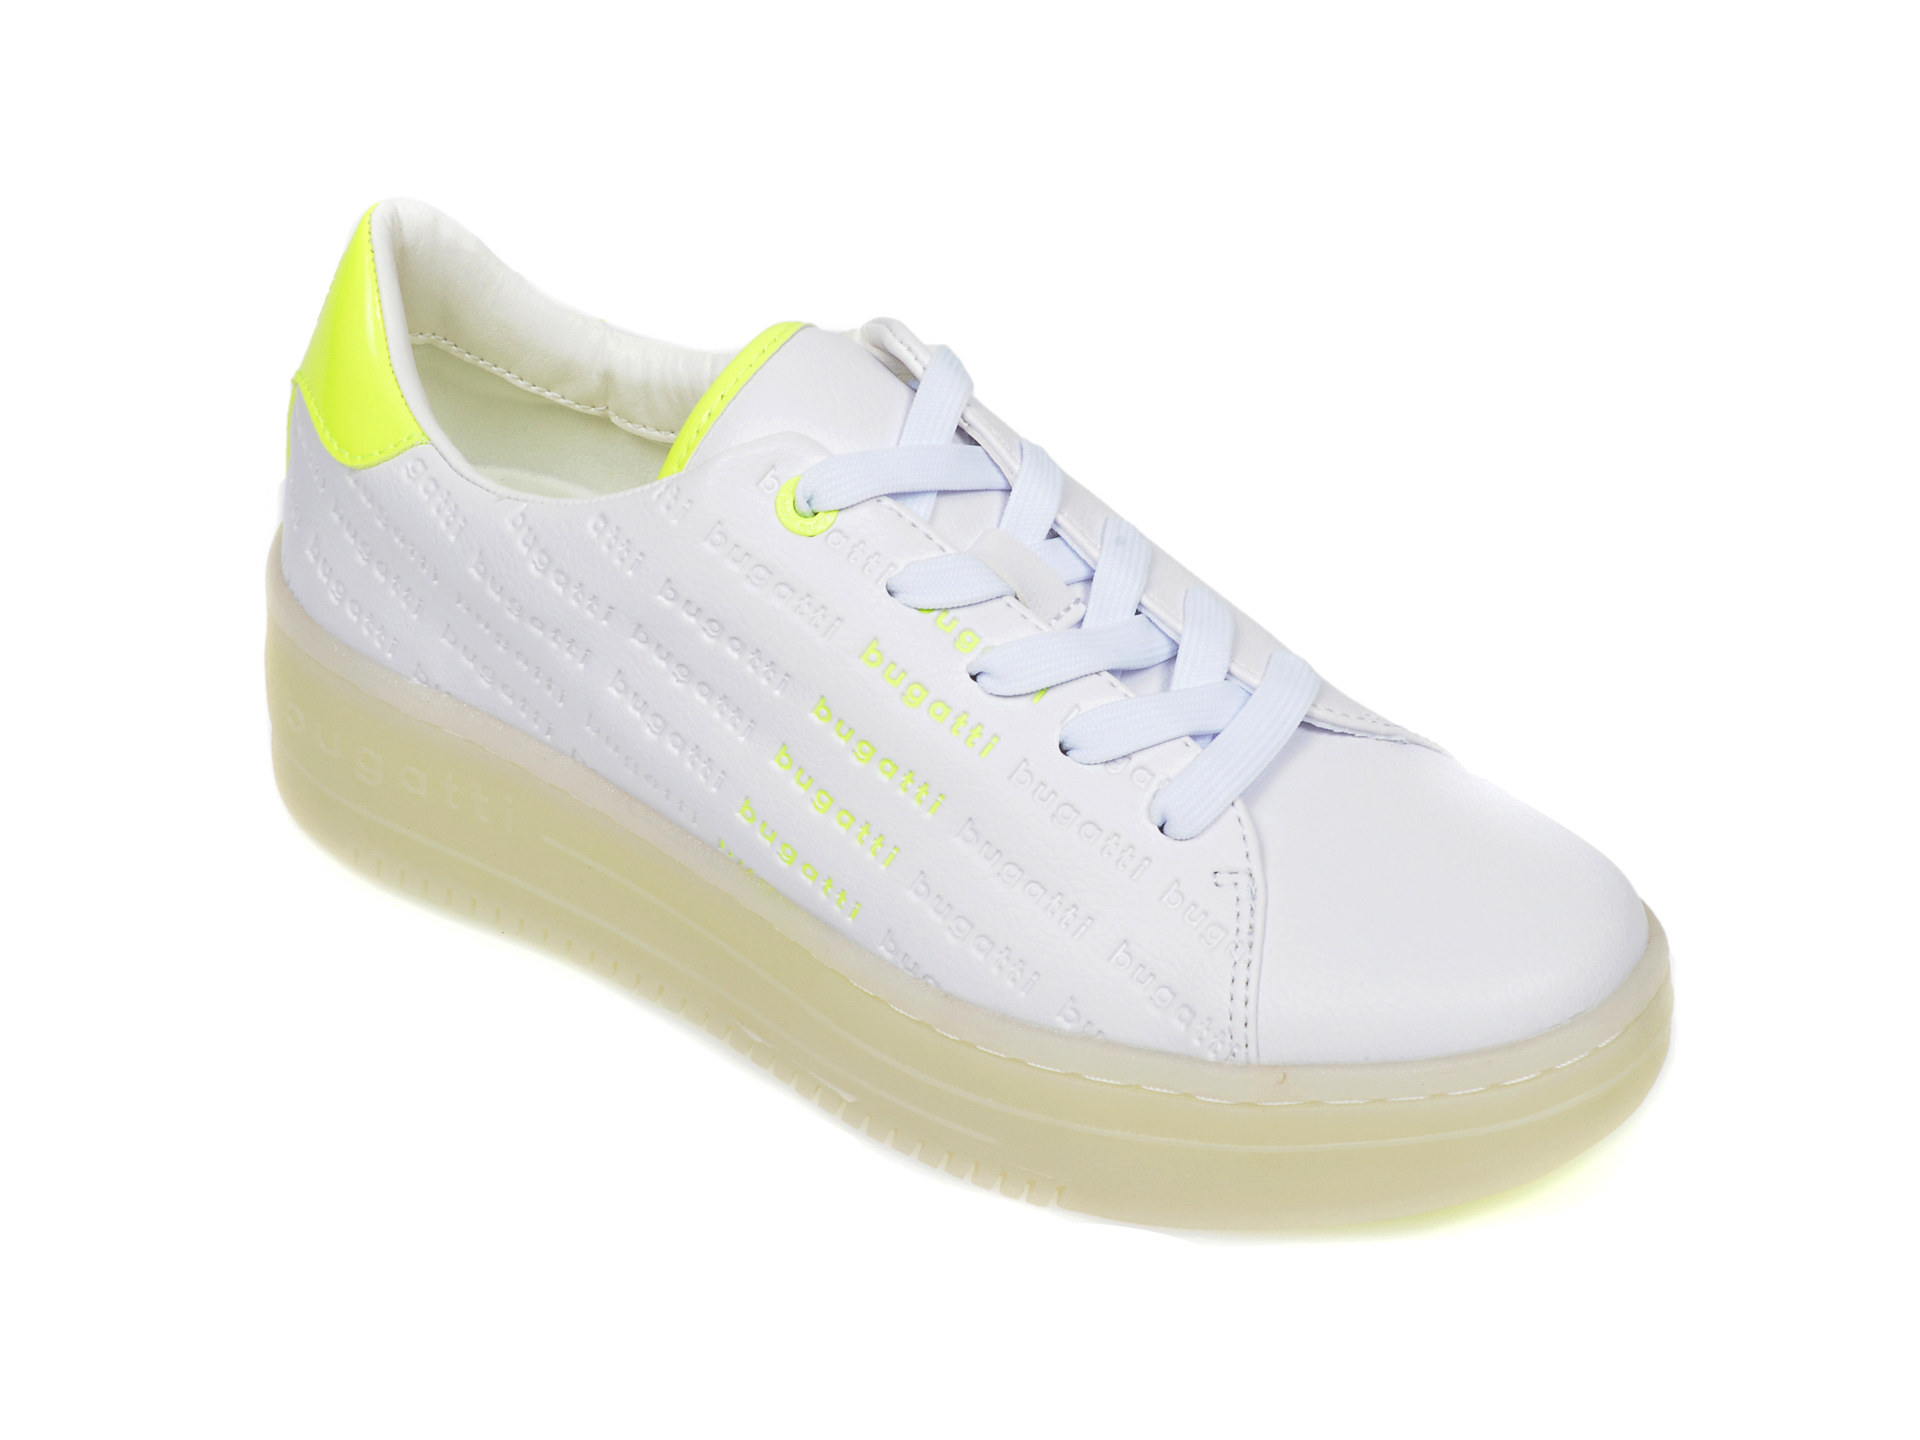 Pantofi sport BUGATTI albi, 86601, din piele ecologica